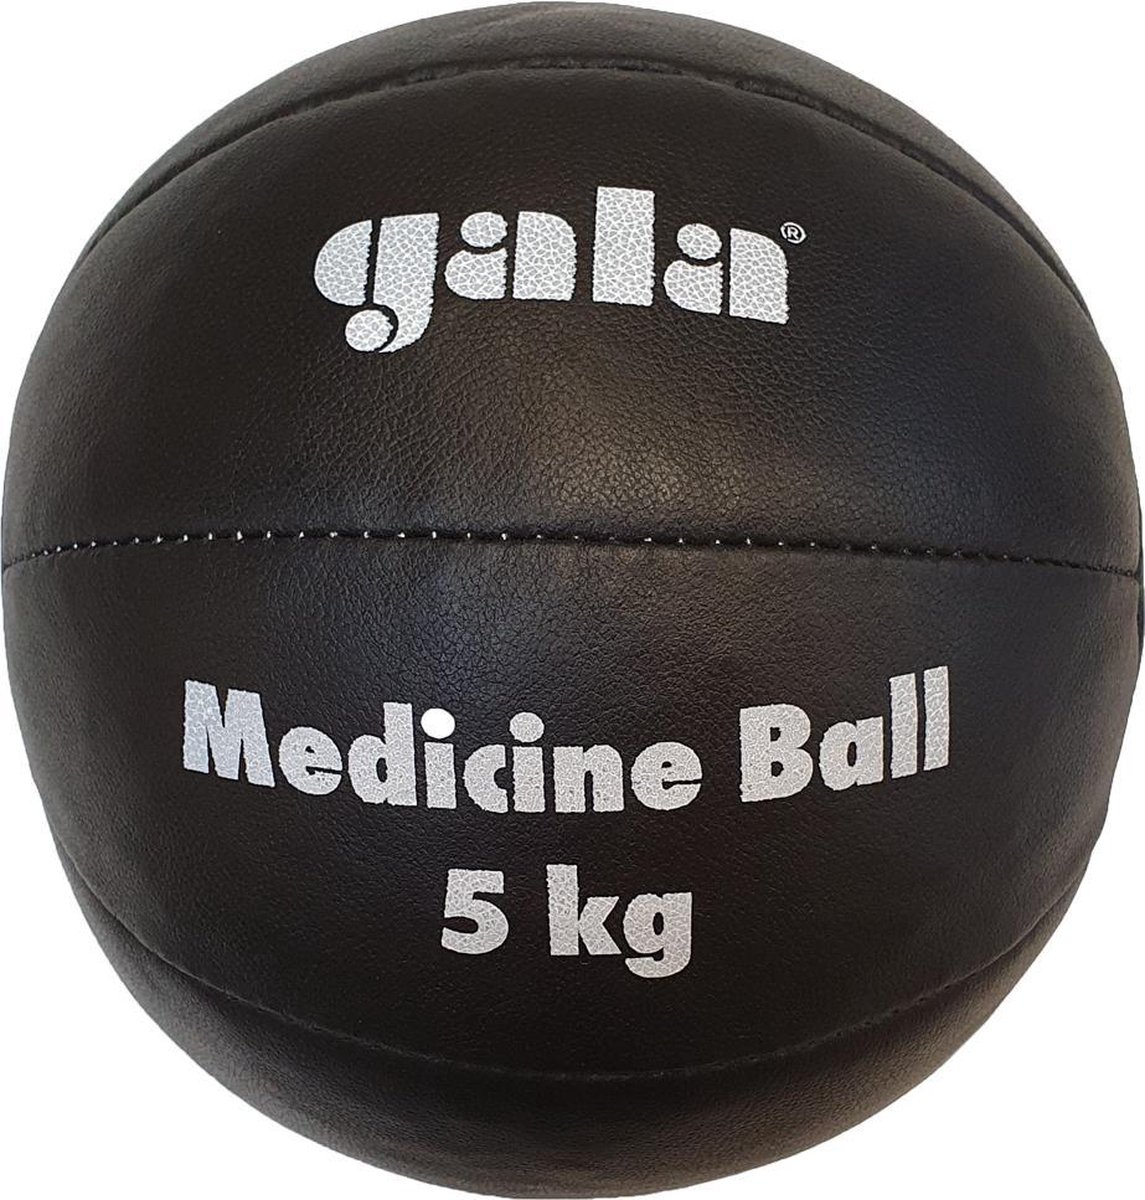 Gala Medicine Ball - Medicijn bal - 5 kg - Zwart Leer